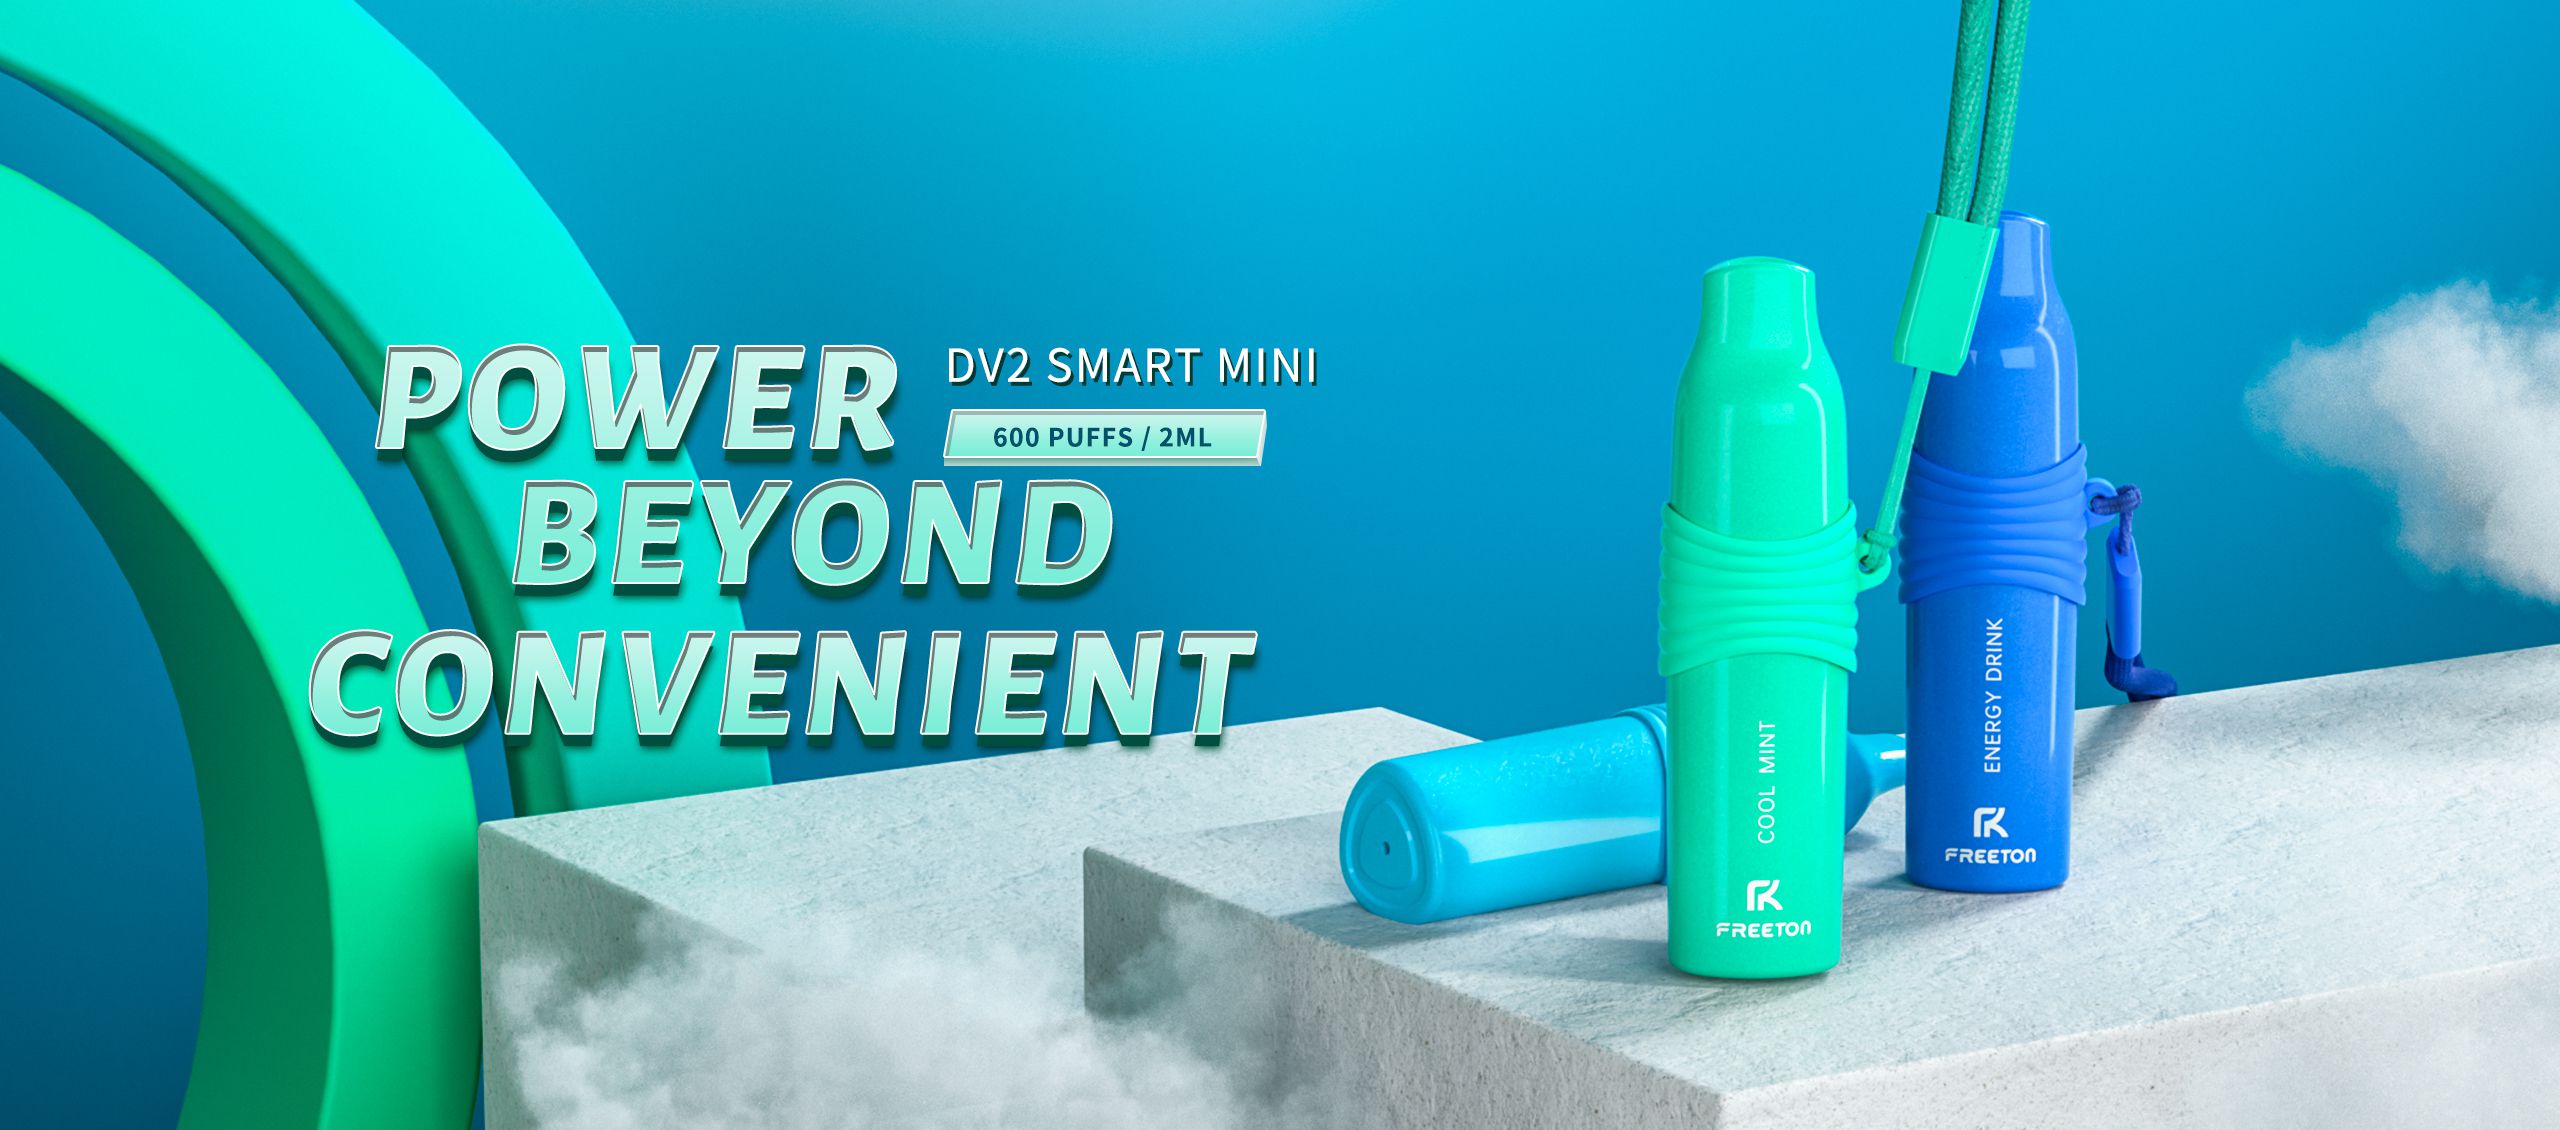 DV2 Smart Mini Electronic Cigarette Review